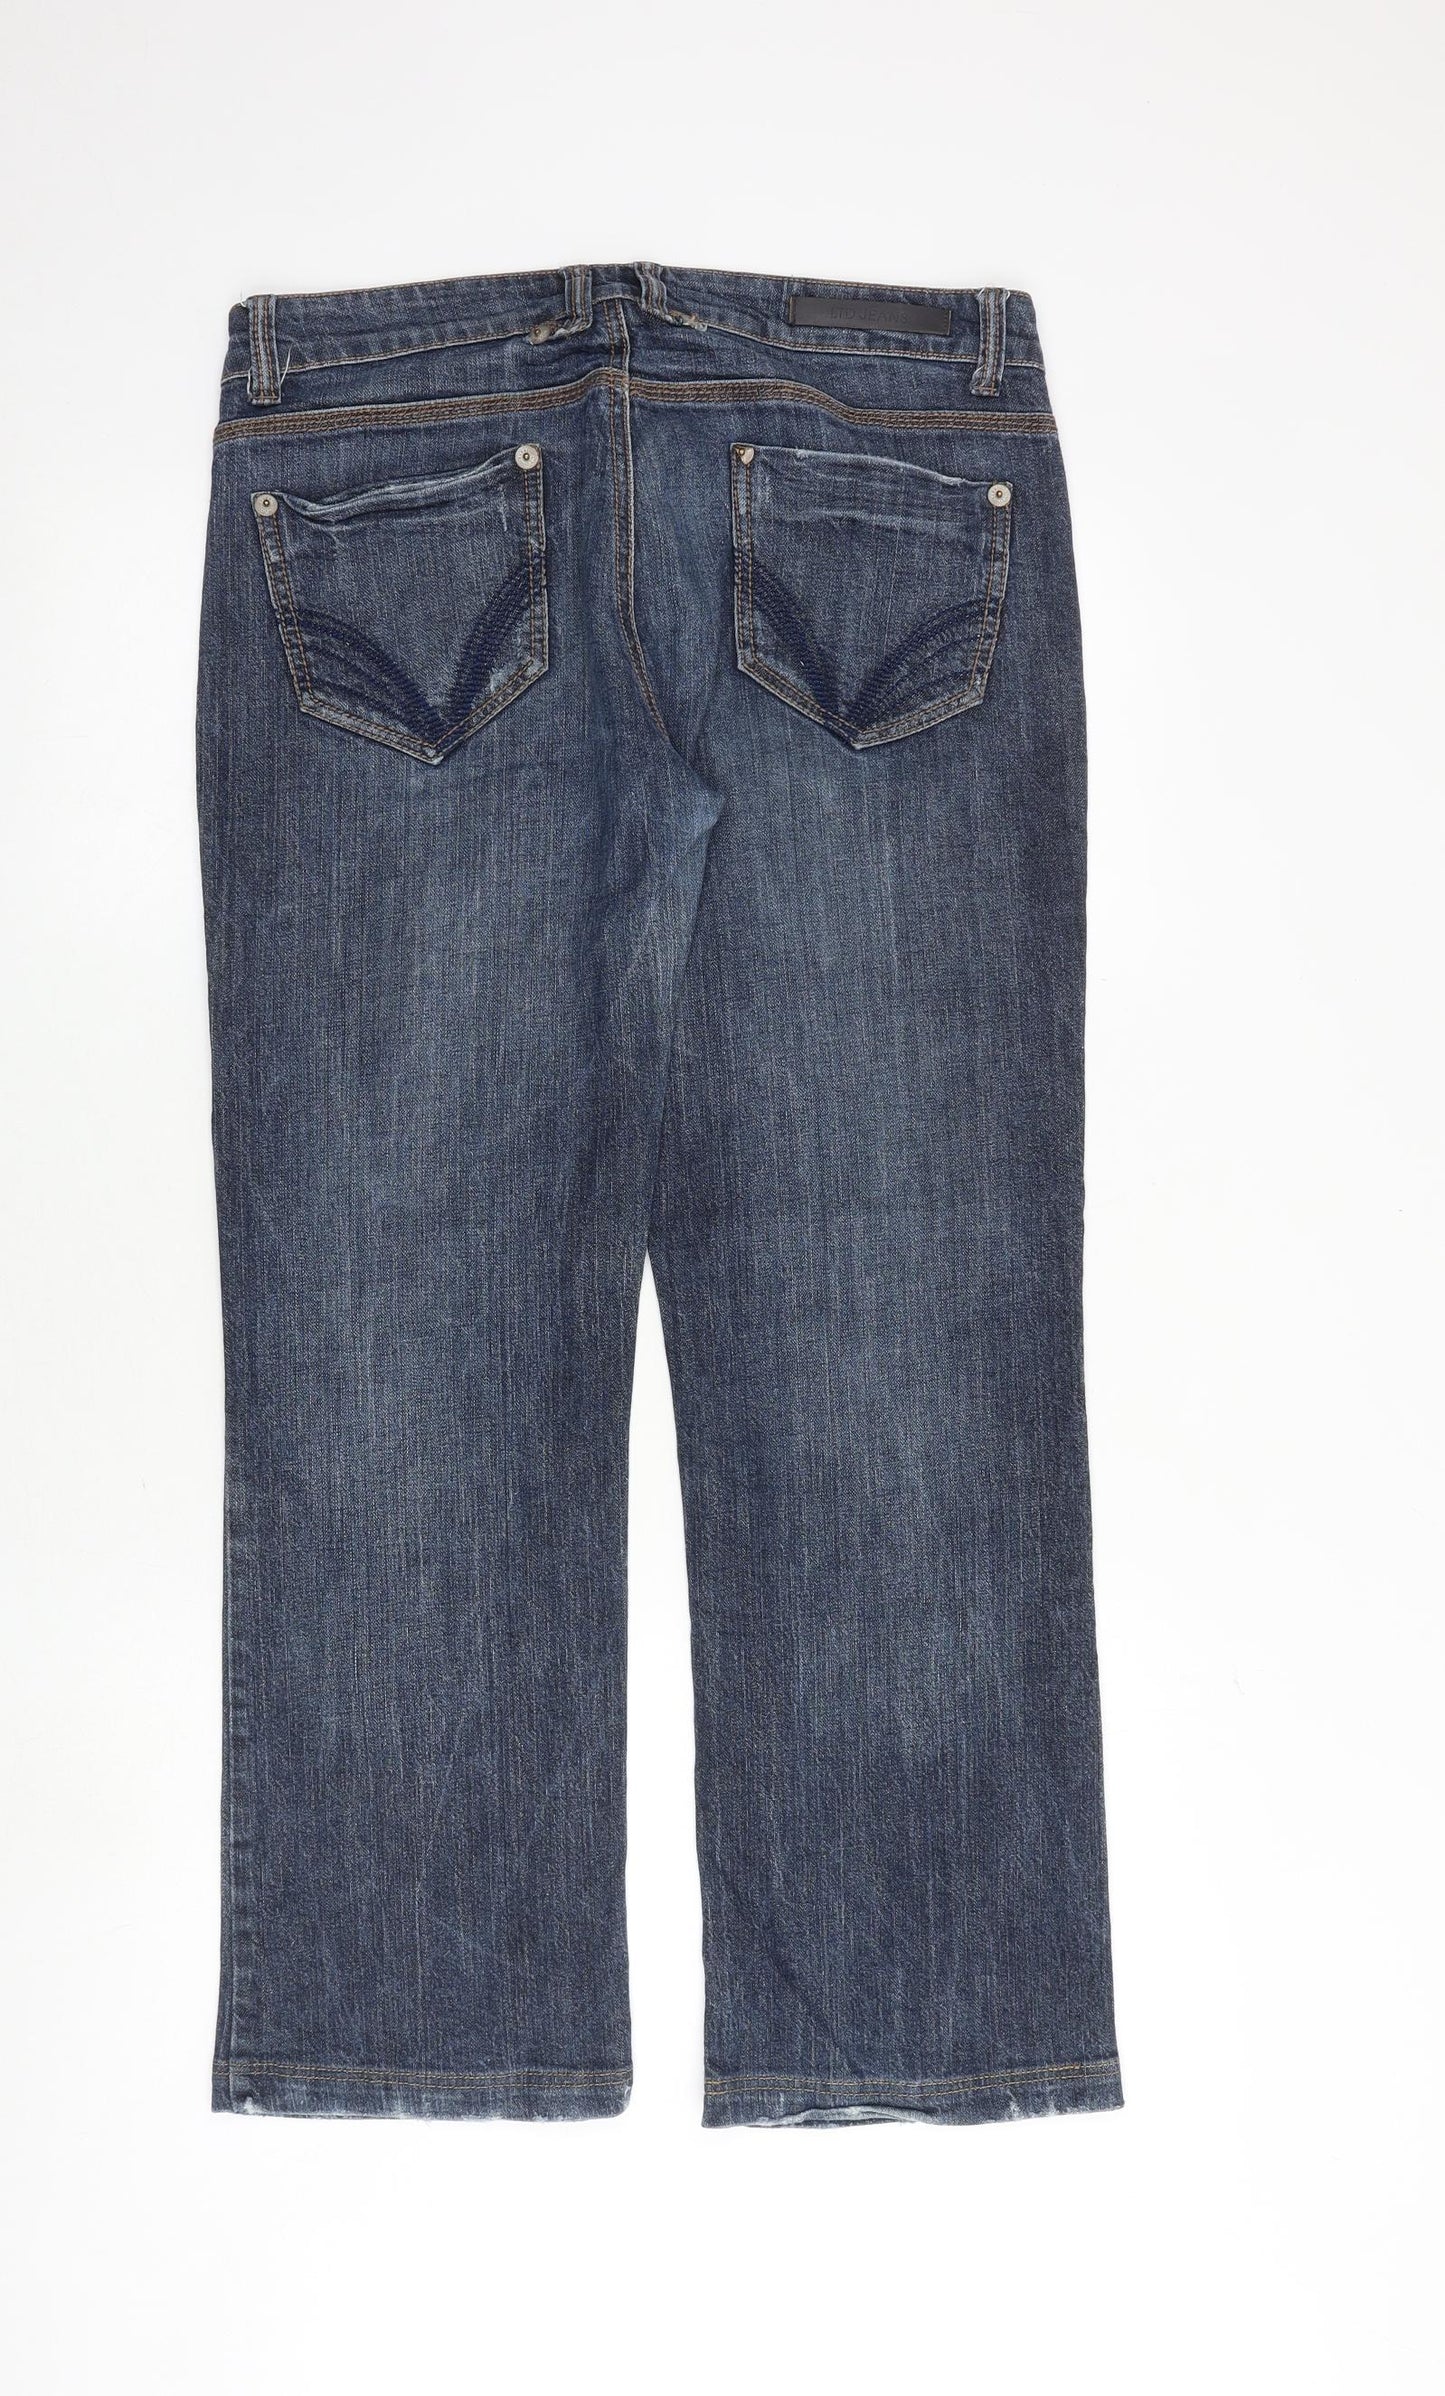 LTD Jeans Womens Blue Cotton Straight Jeans Size 34 in Regular Zip